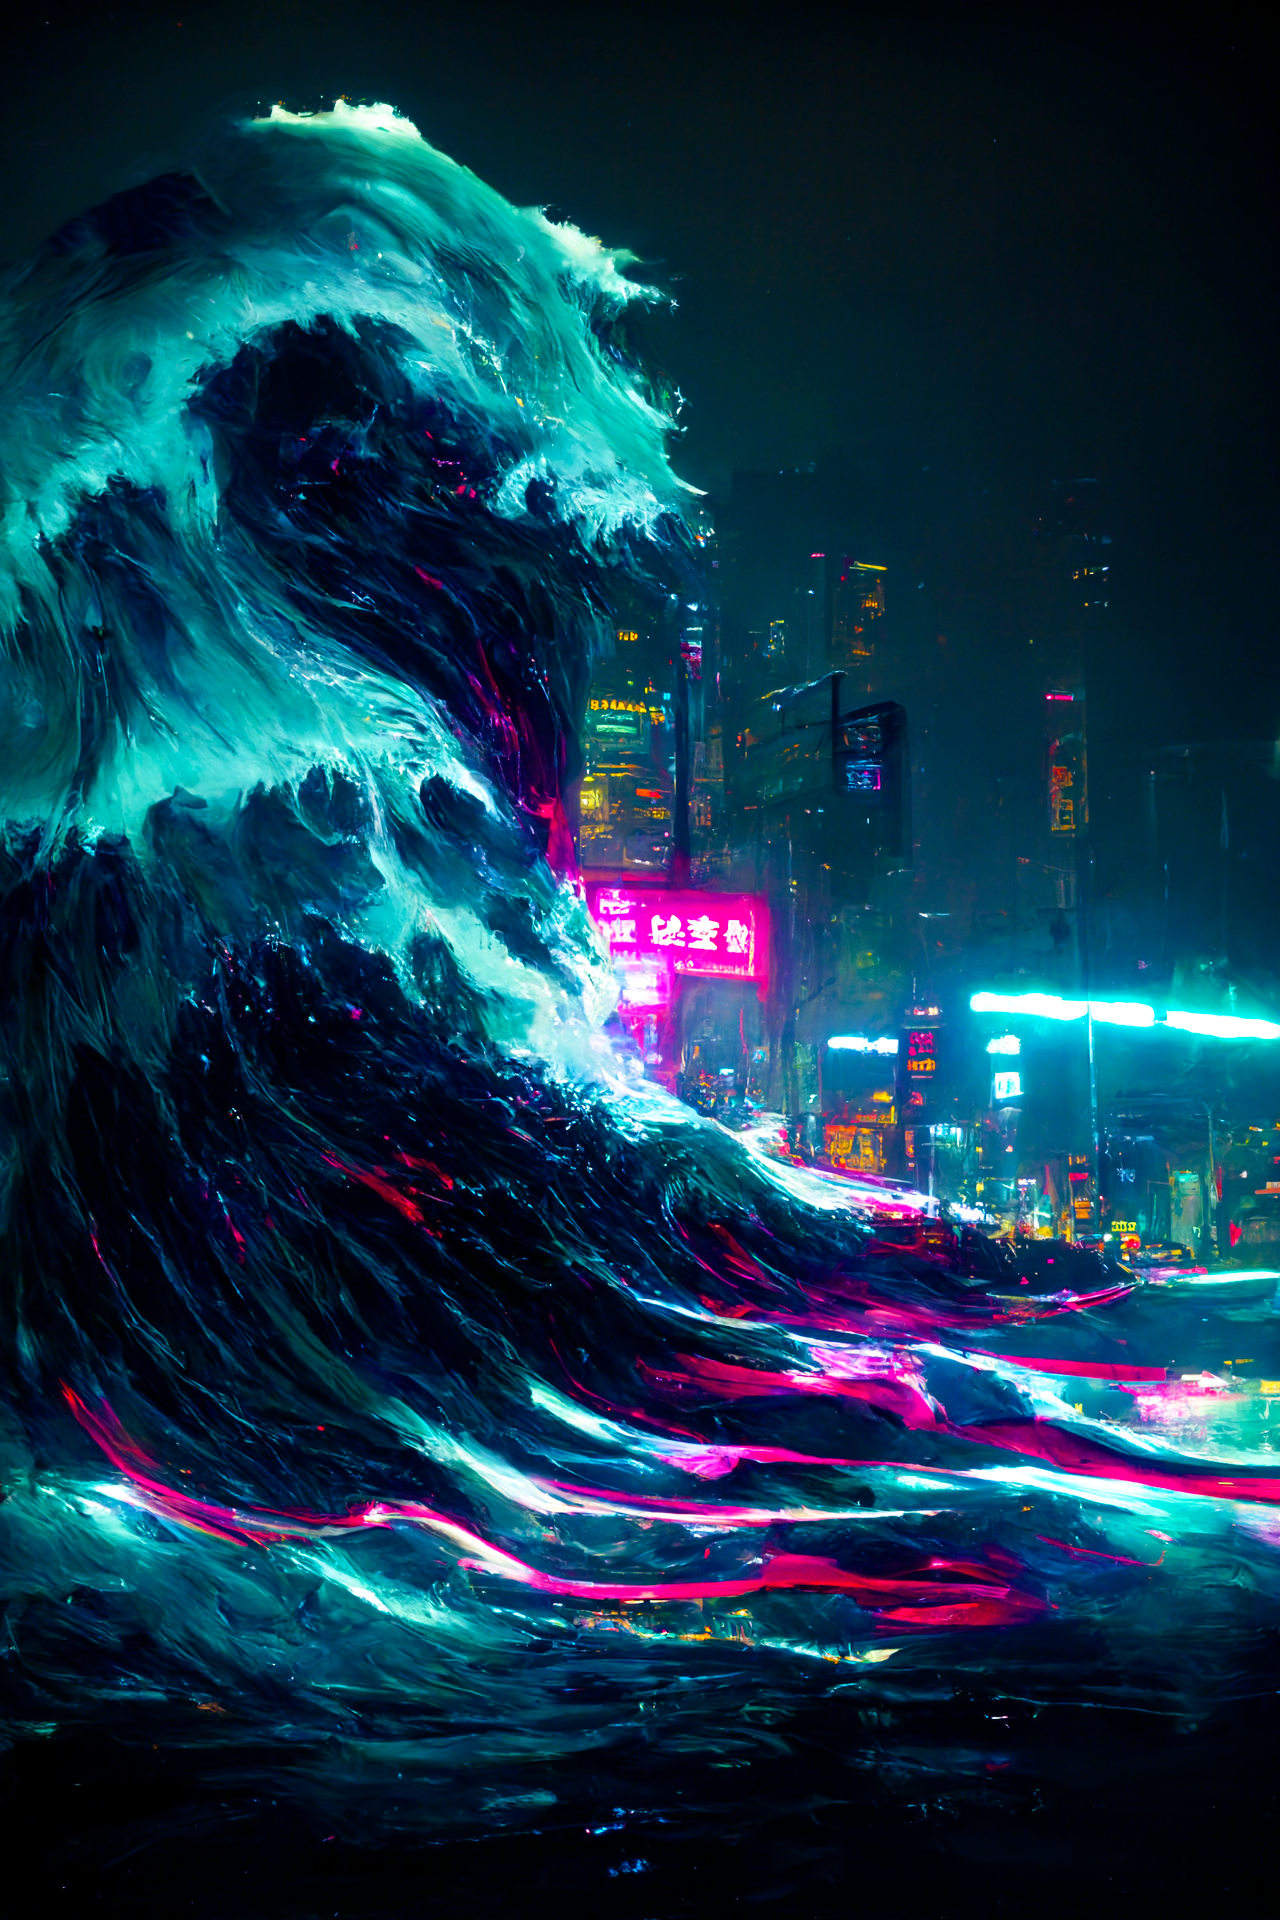 The Great wave off Hong Kong